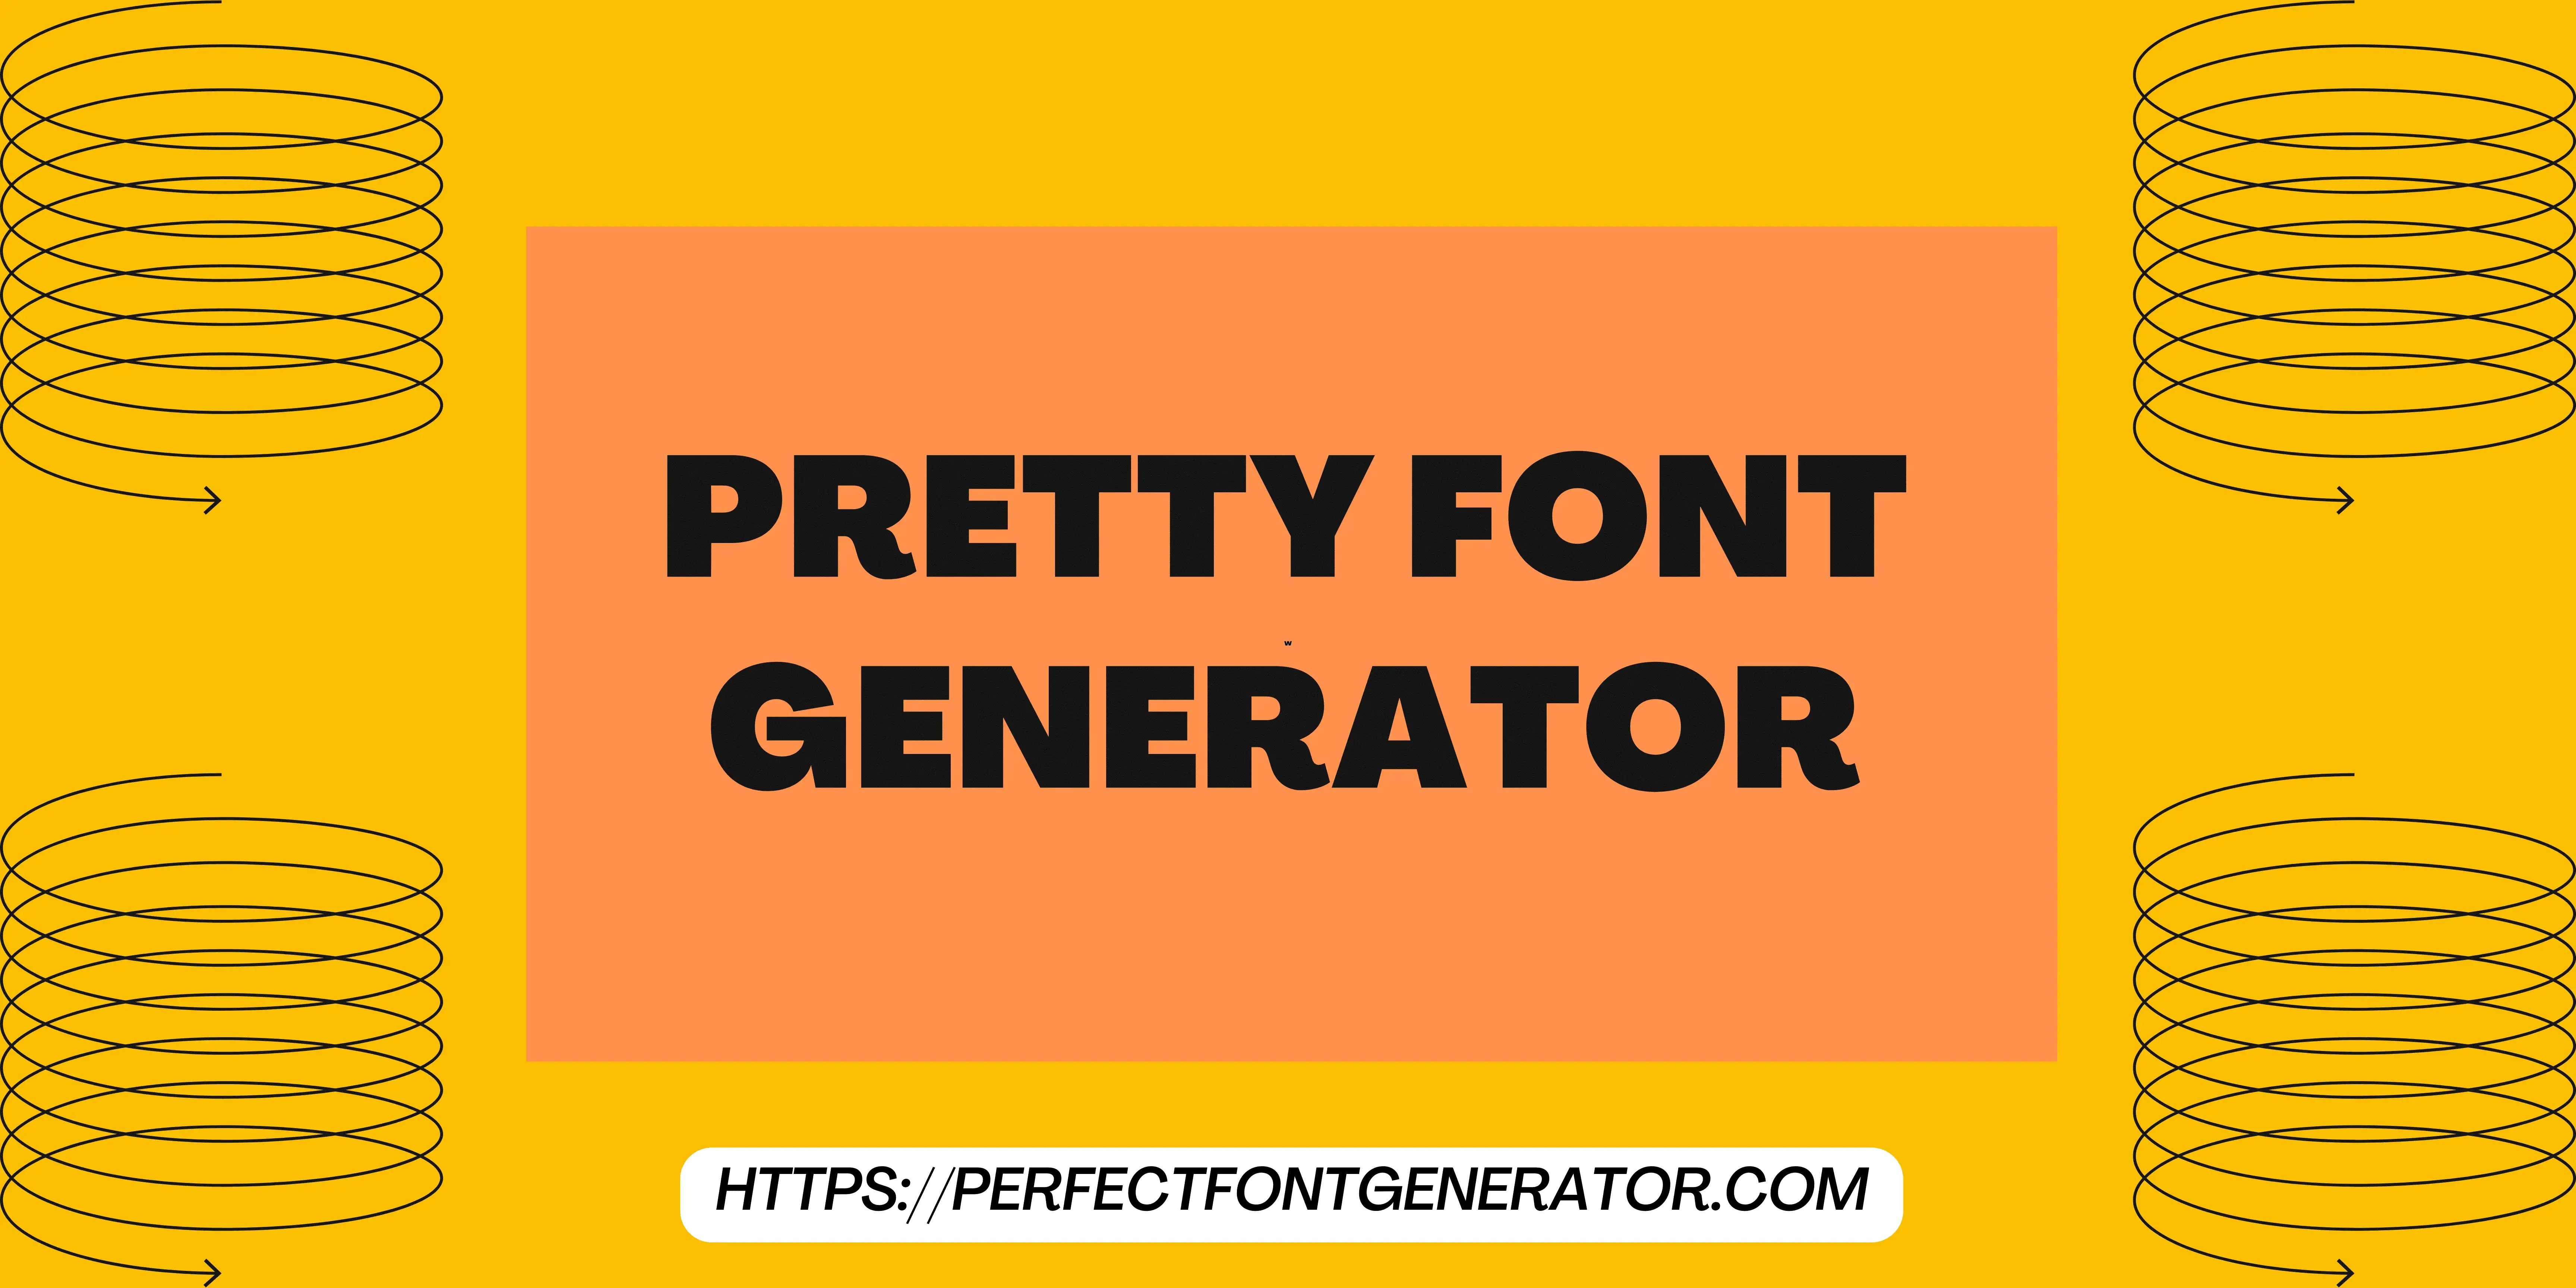 Pretty Font Generator: Online Copy/Paste Tool